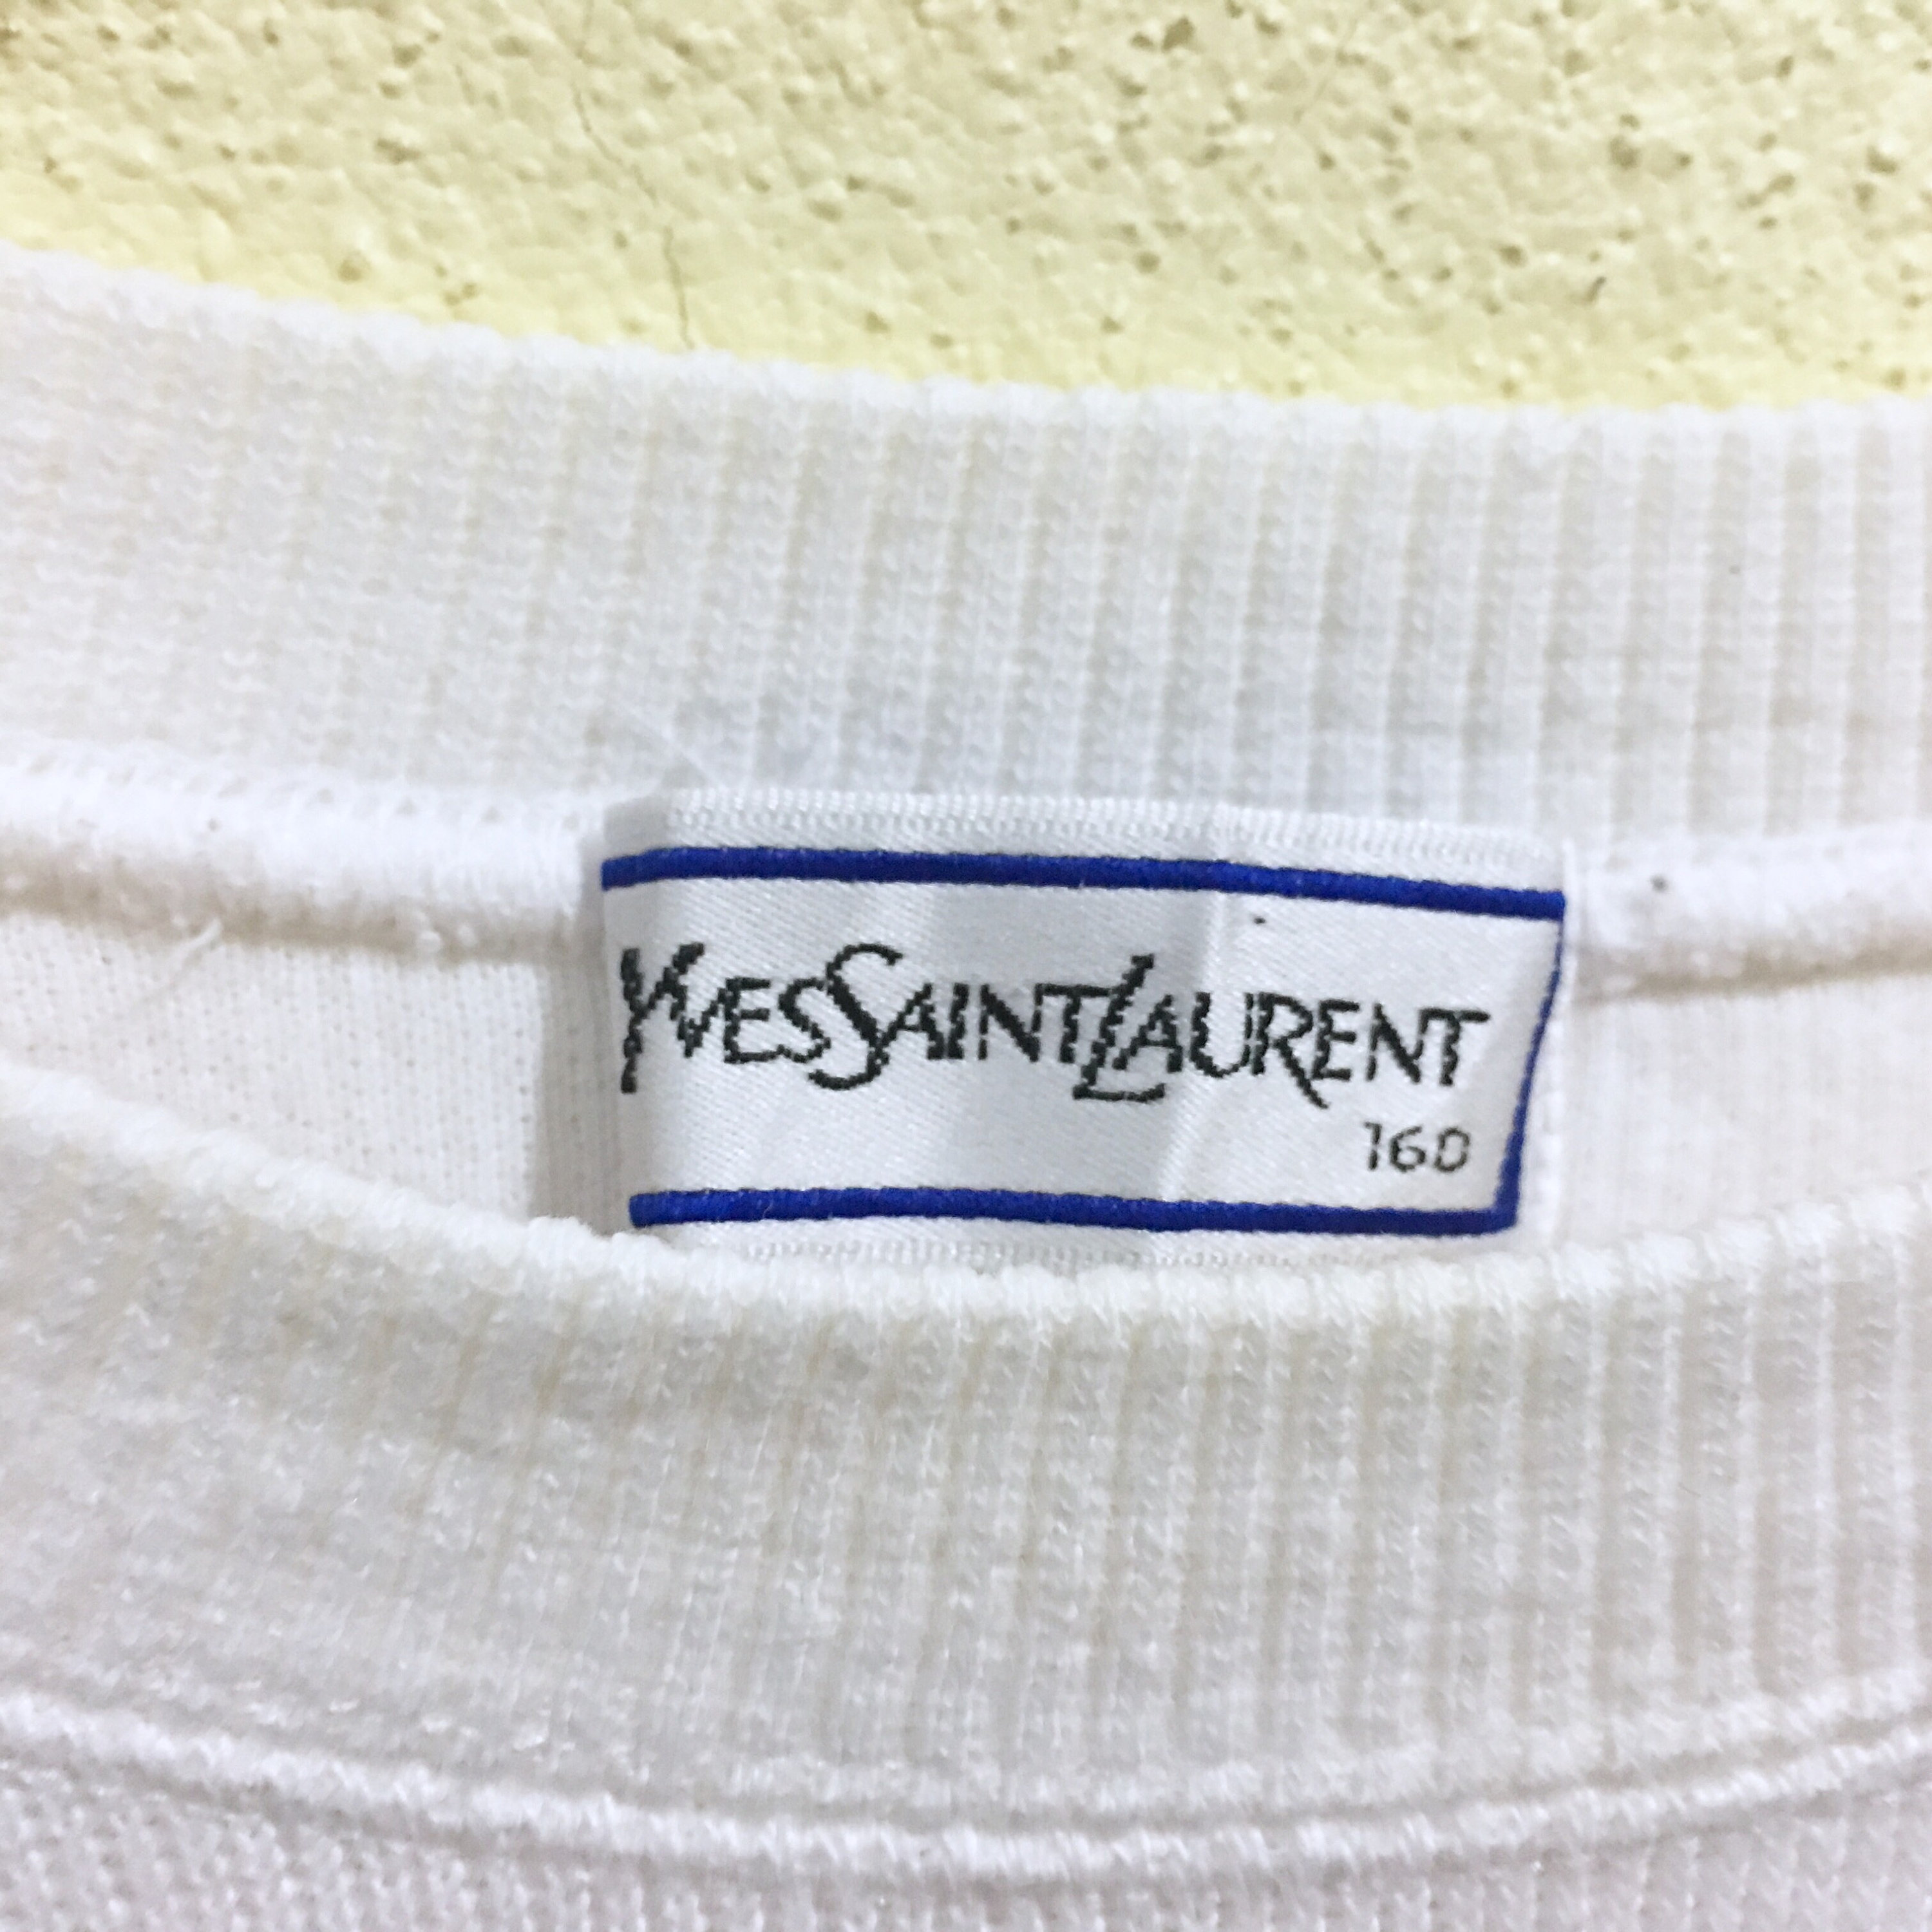 Buy Extremely Rare Vintage Yves Saint Laurent Sweatshirt Online in